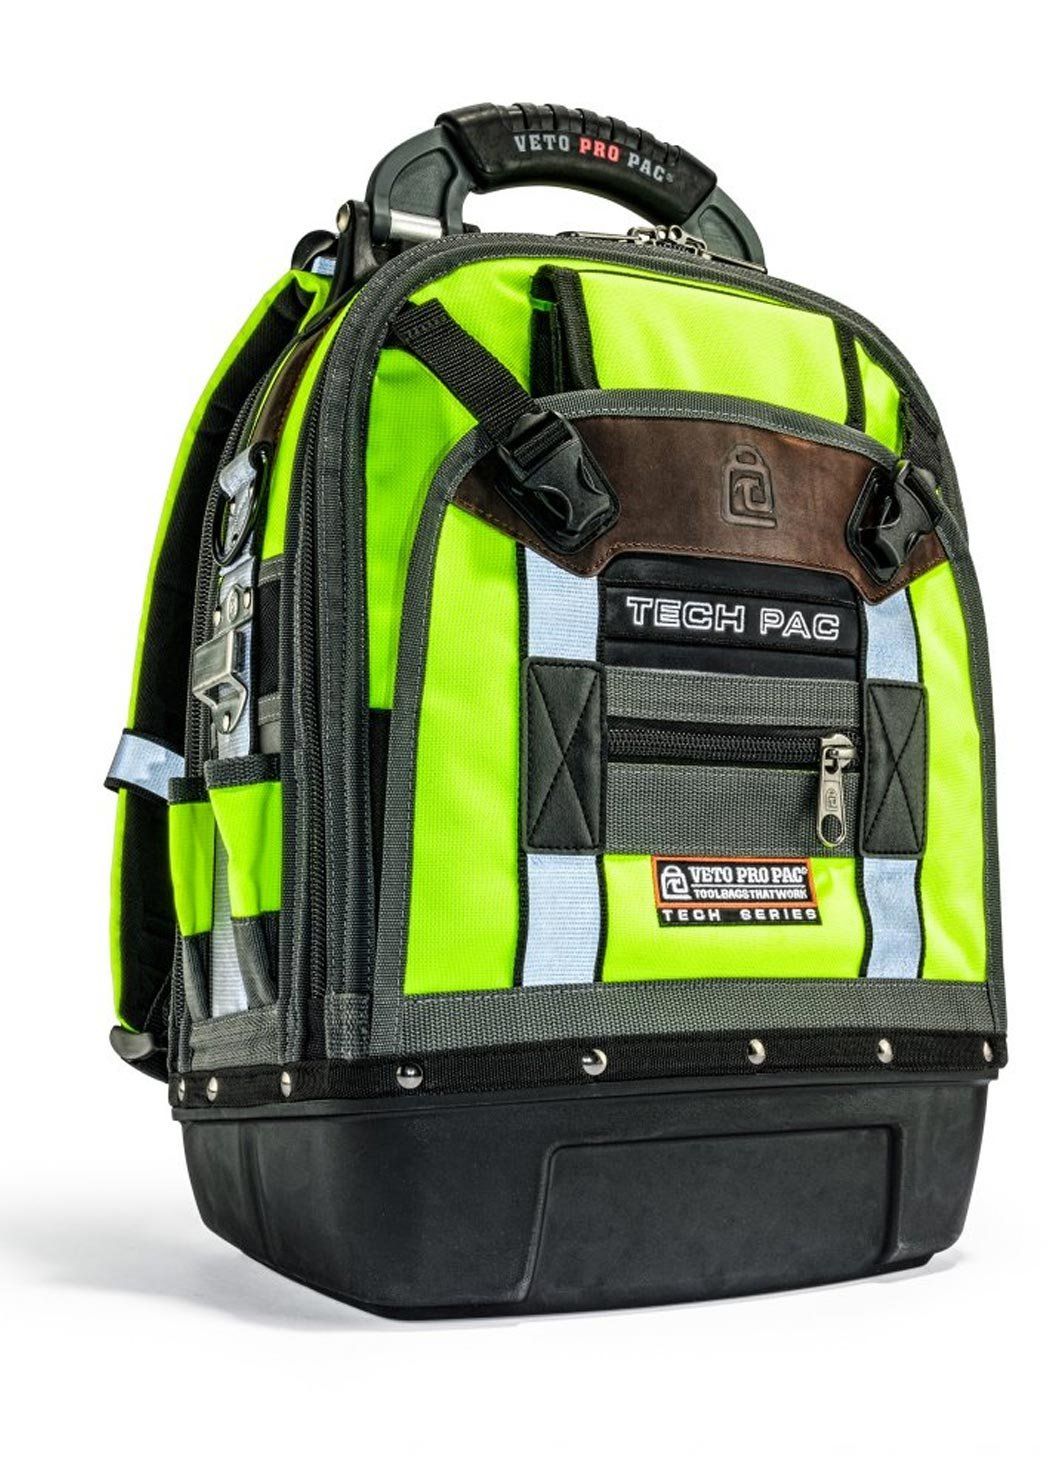 Backpack Tool Bag Veto Pro Pac Tech Pac 